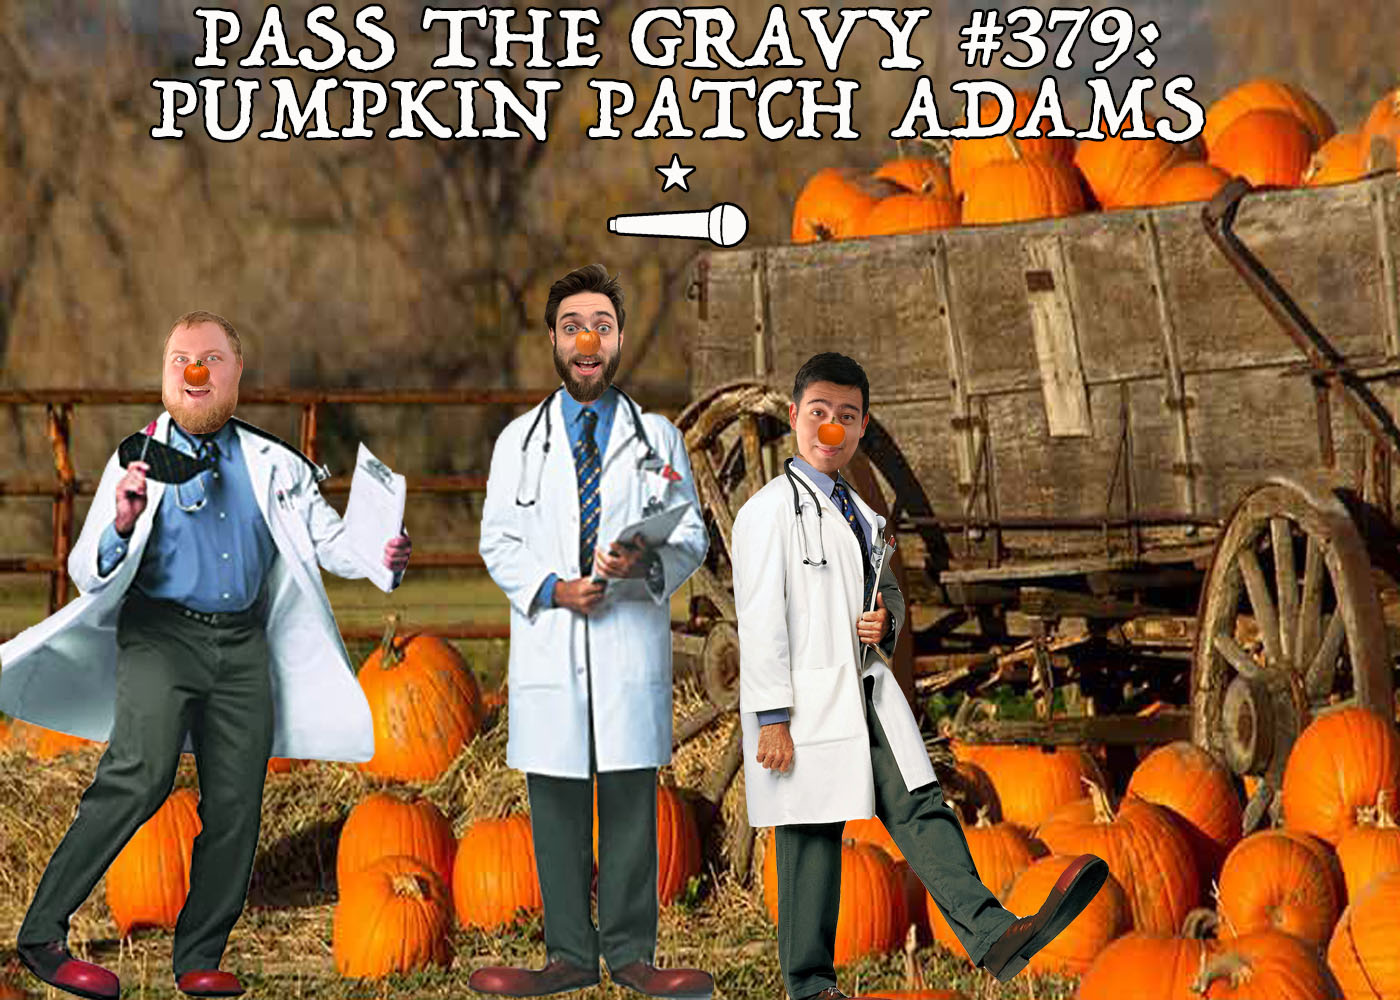 pass the gravy 379